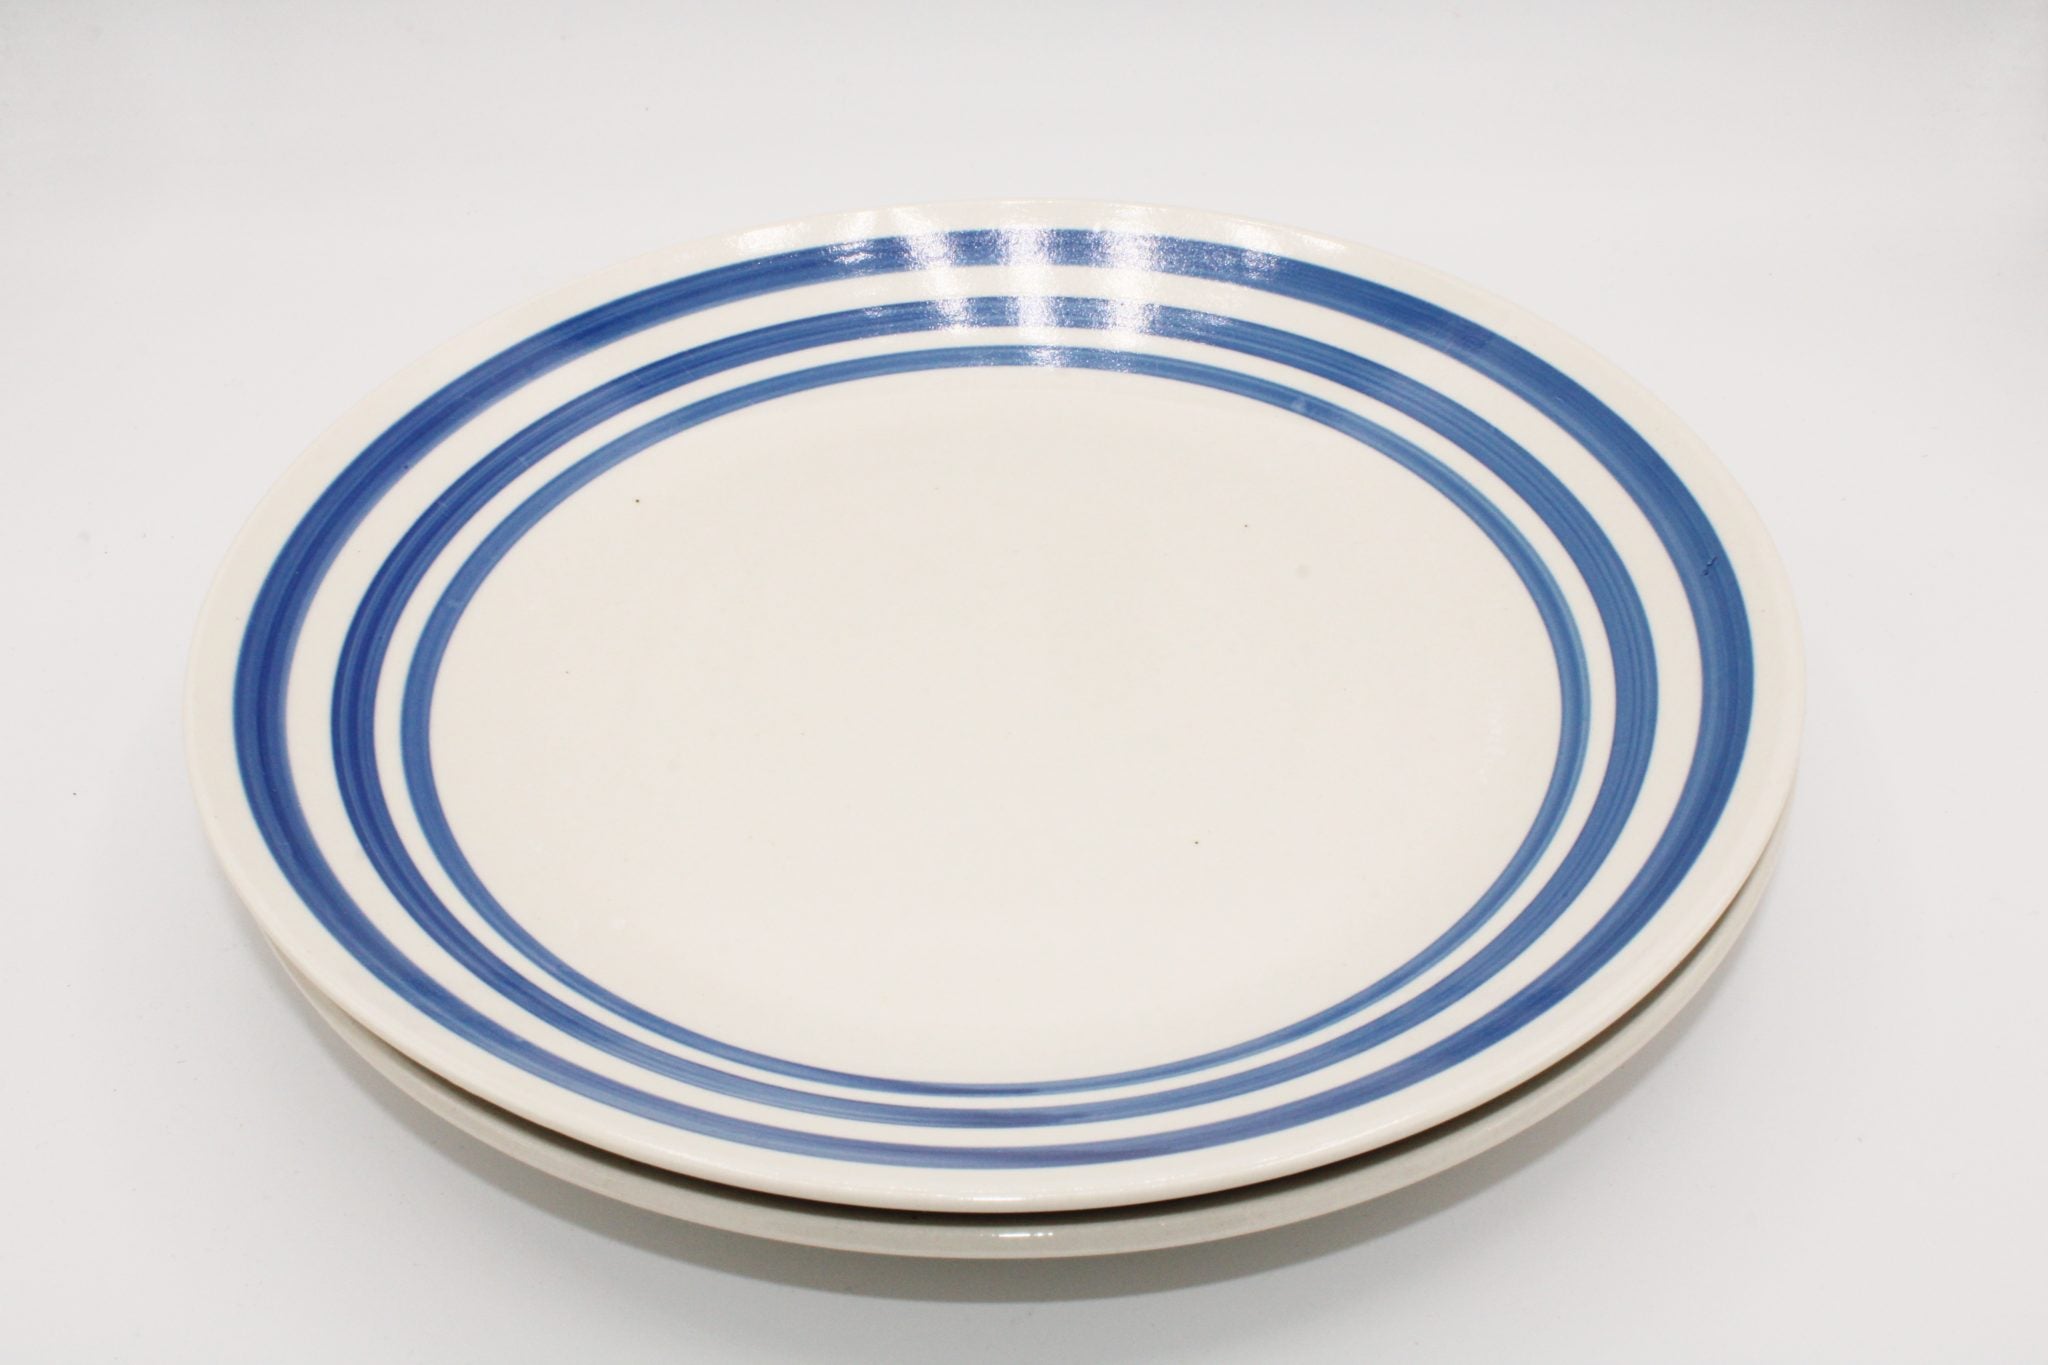 Mainstays Ceramic Plates Cream with Blue Stripes